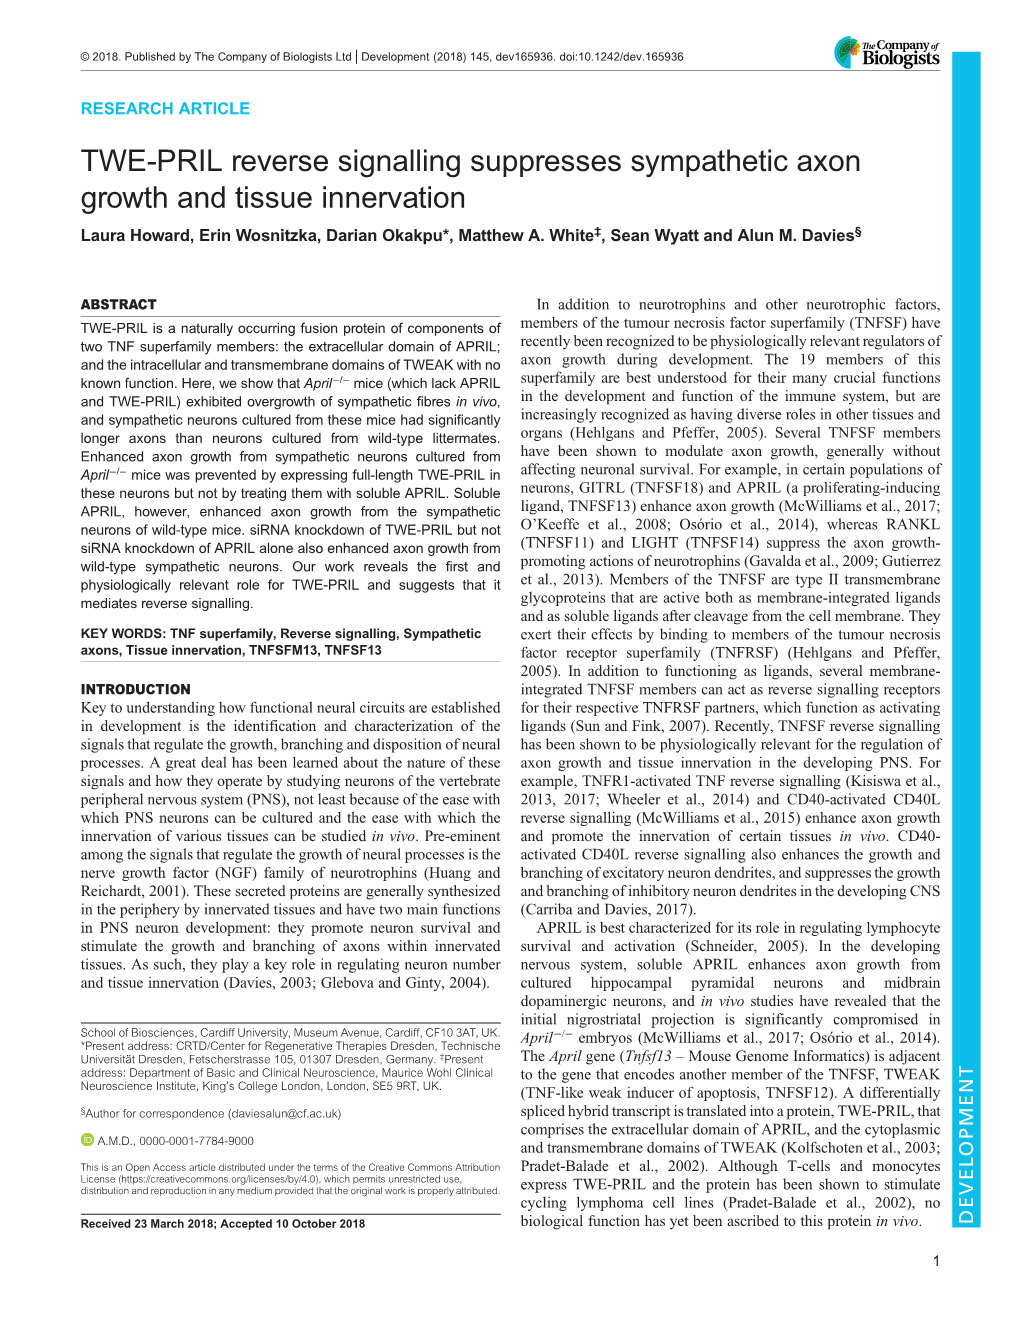 TWE-PRIL Reverse Signalling Suppresses Sympathetic Axon Growth and Tissue Innervation Laura Howard, Erin Wosnitzka, Darian Okakpu*, Matthew A